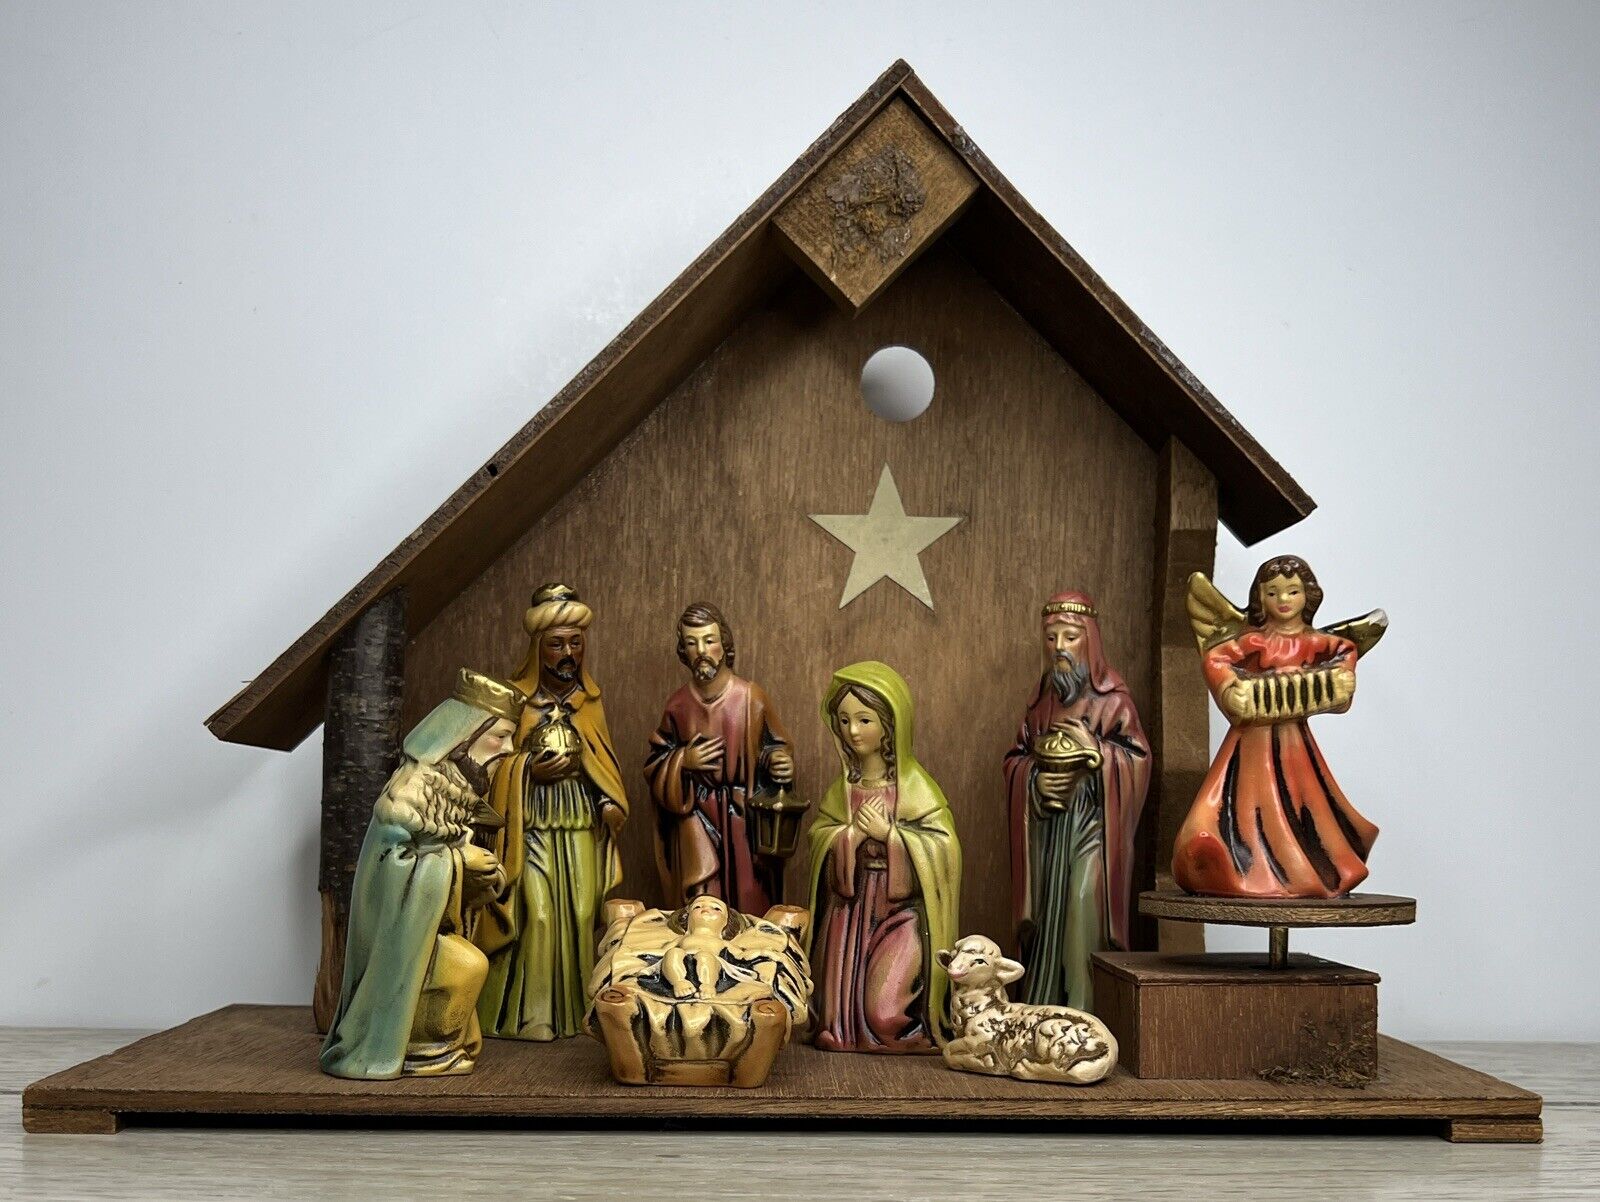 VTG Nativity Set Japan Plays Silent Night Figures Wood Stable 14” x 11” x 6.5”